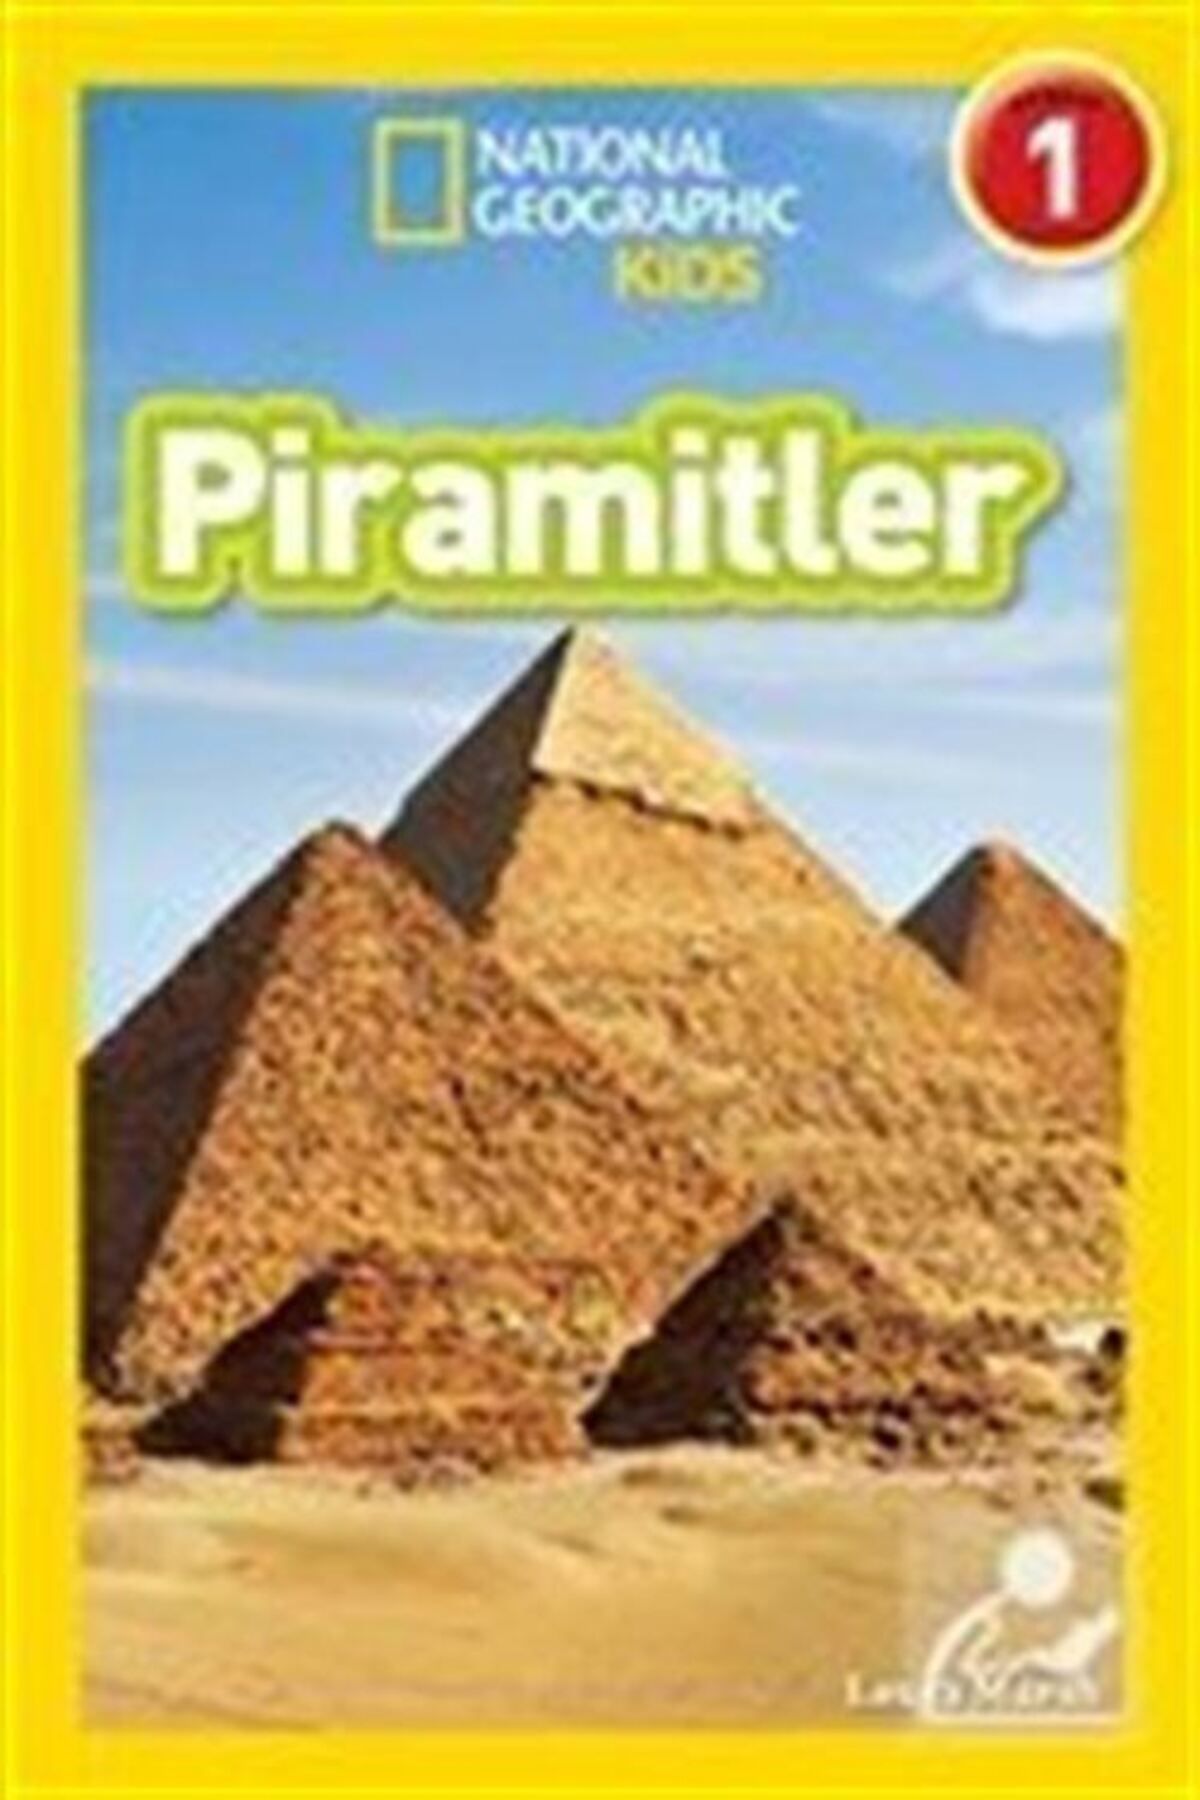 Beta Kids Piramitler - National Geographic Kids